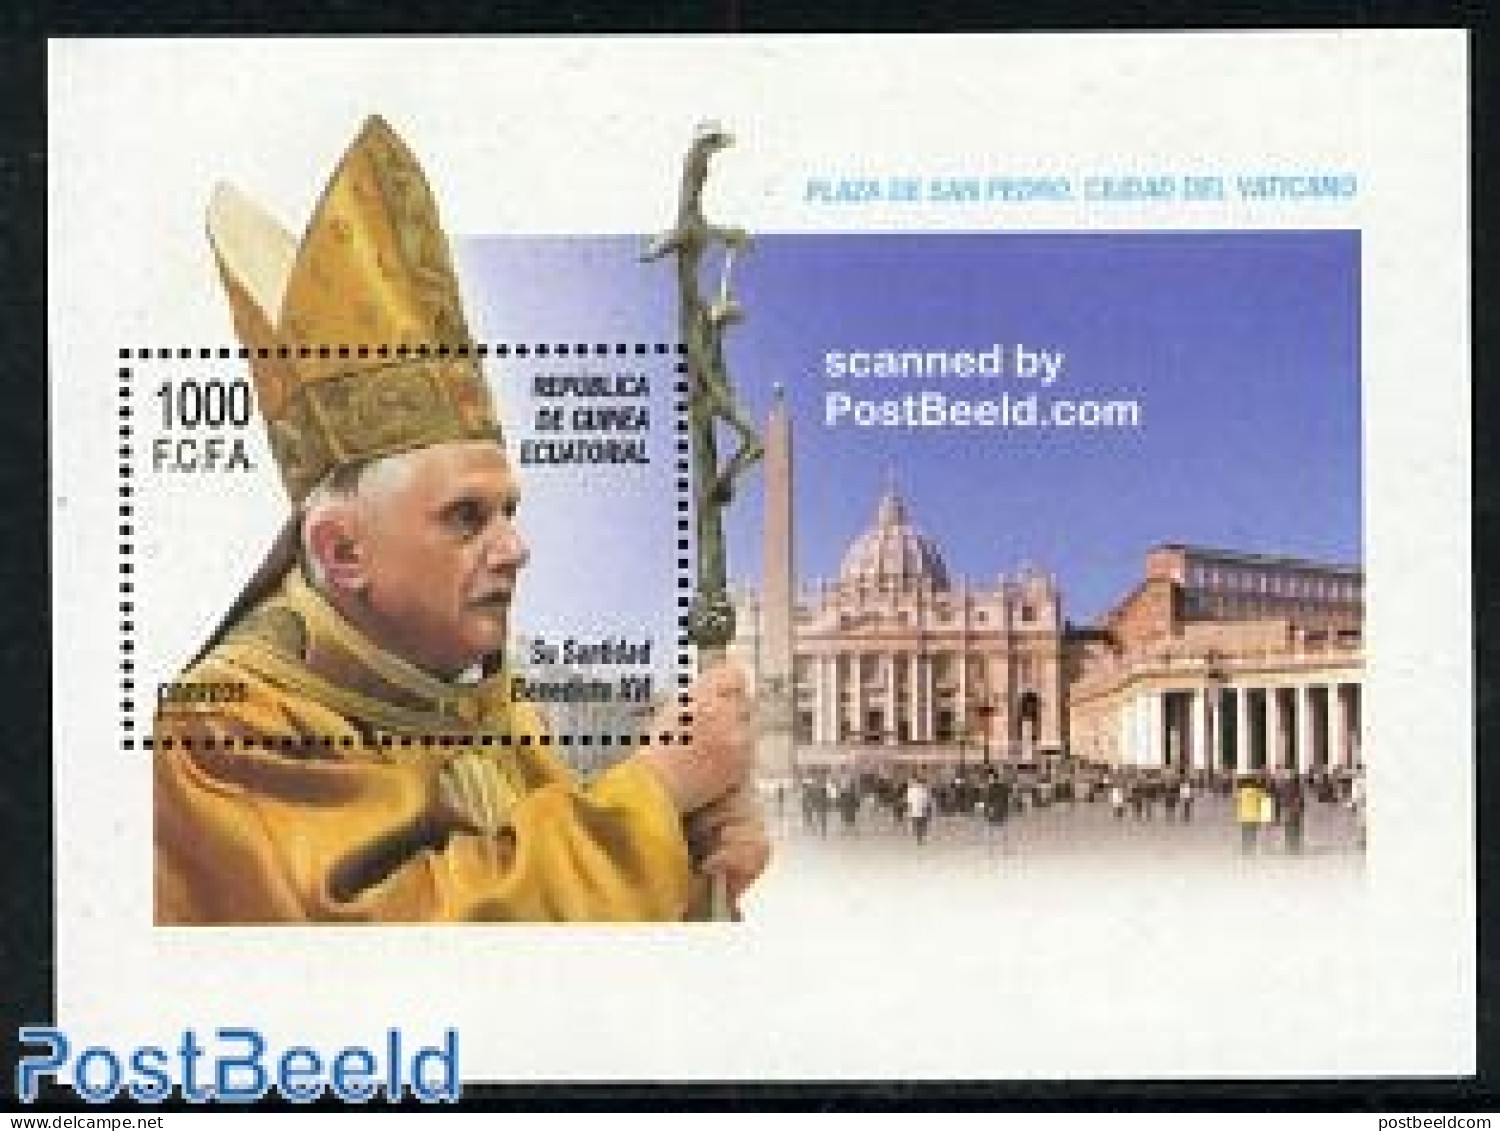 Equatorial Guinea 2006 Pope Benedict XVI S/s, Mint NH, Religion - Pope - Religion - Popes